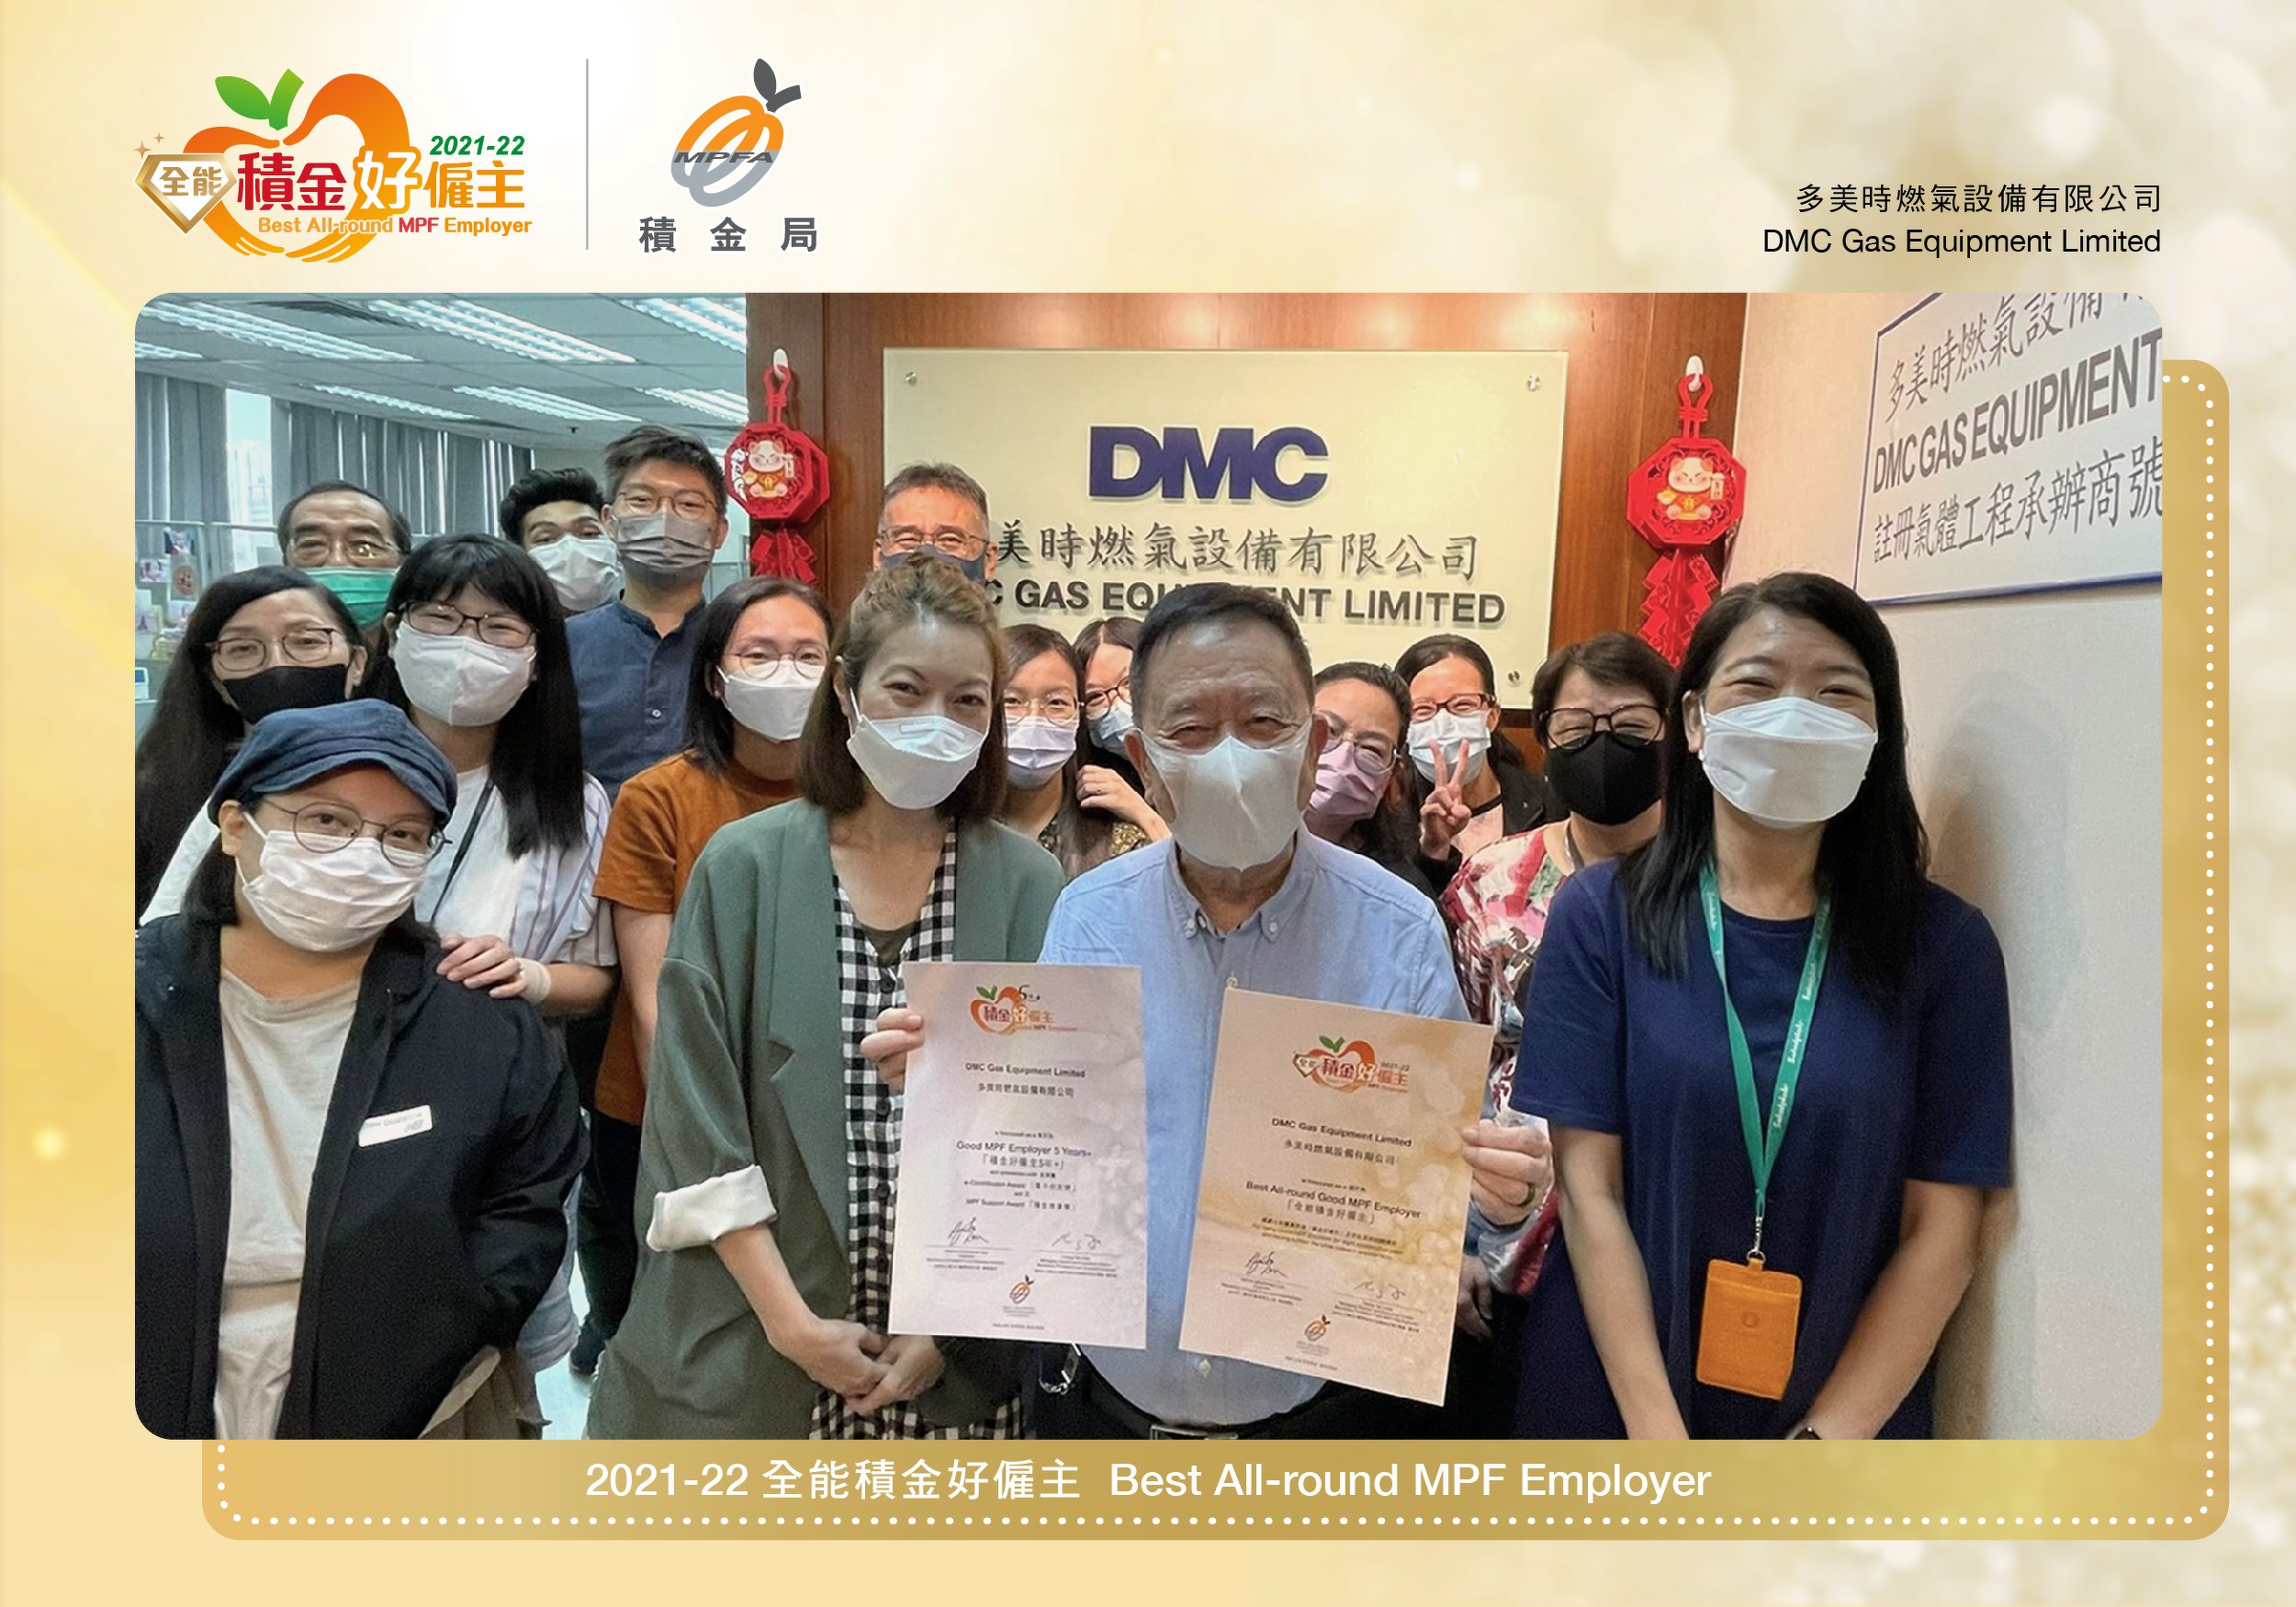 DMC Gas Equipment Limited 多美時燃氣設備有限公司